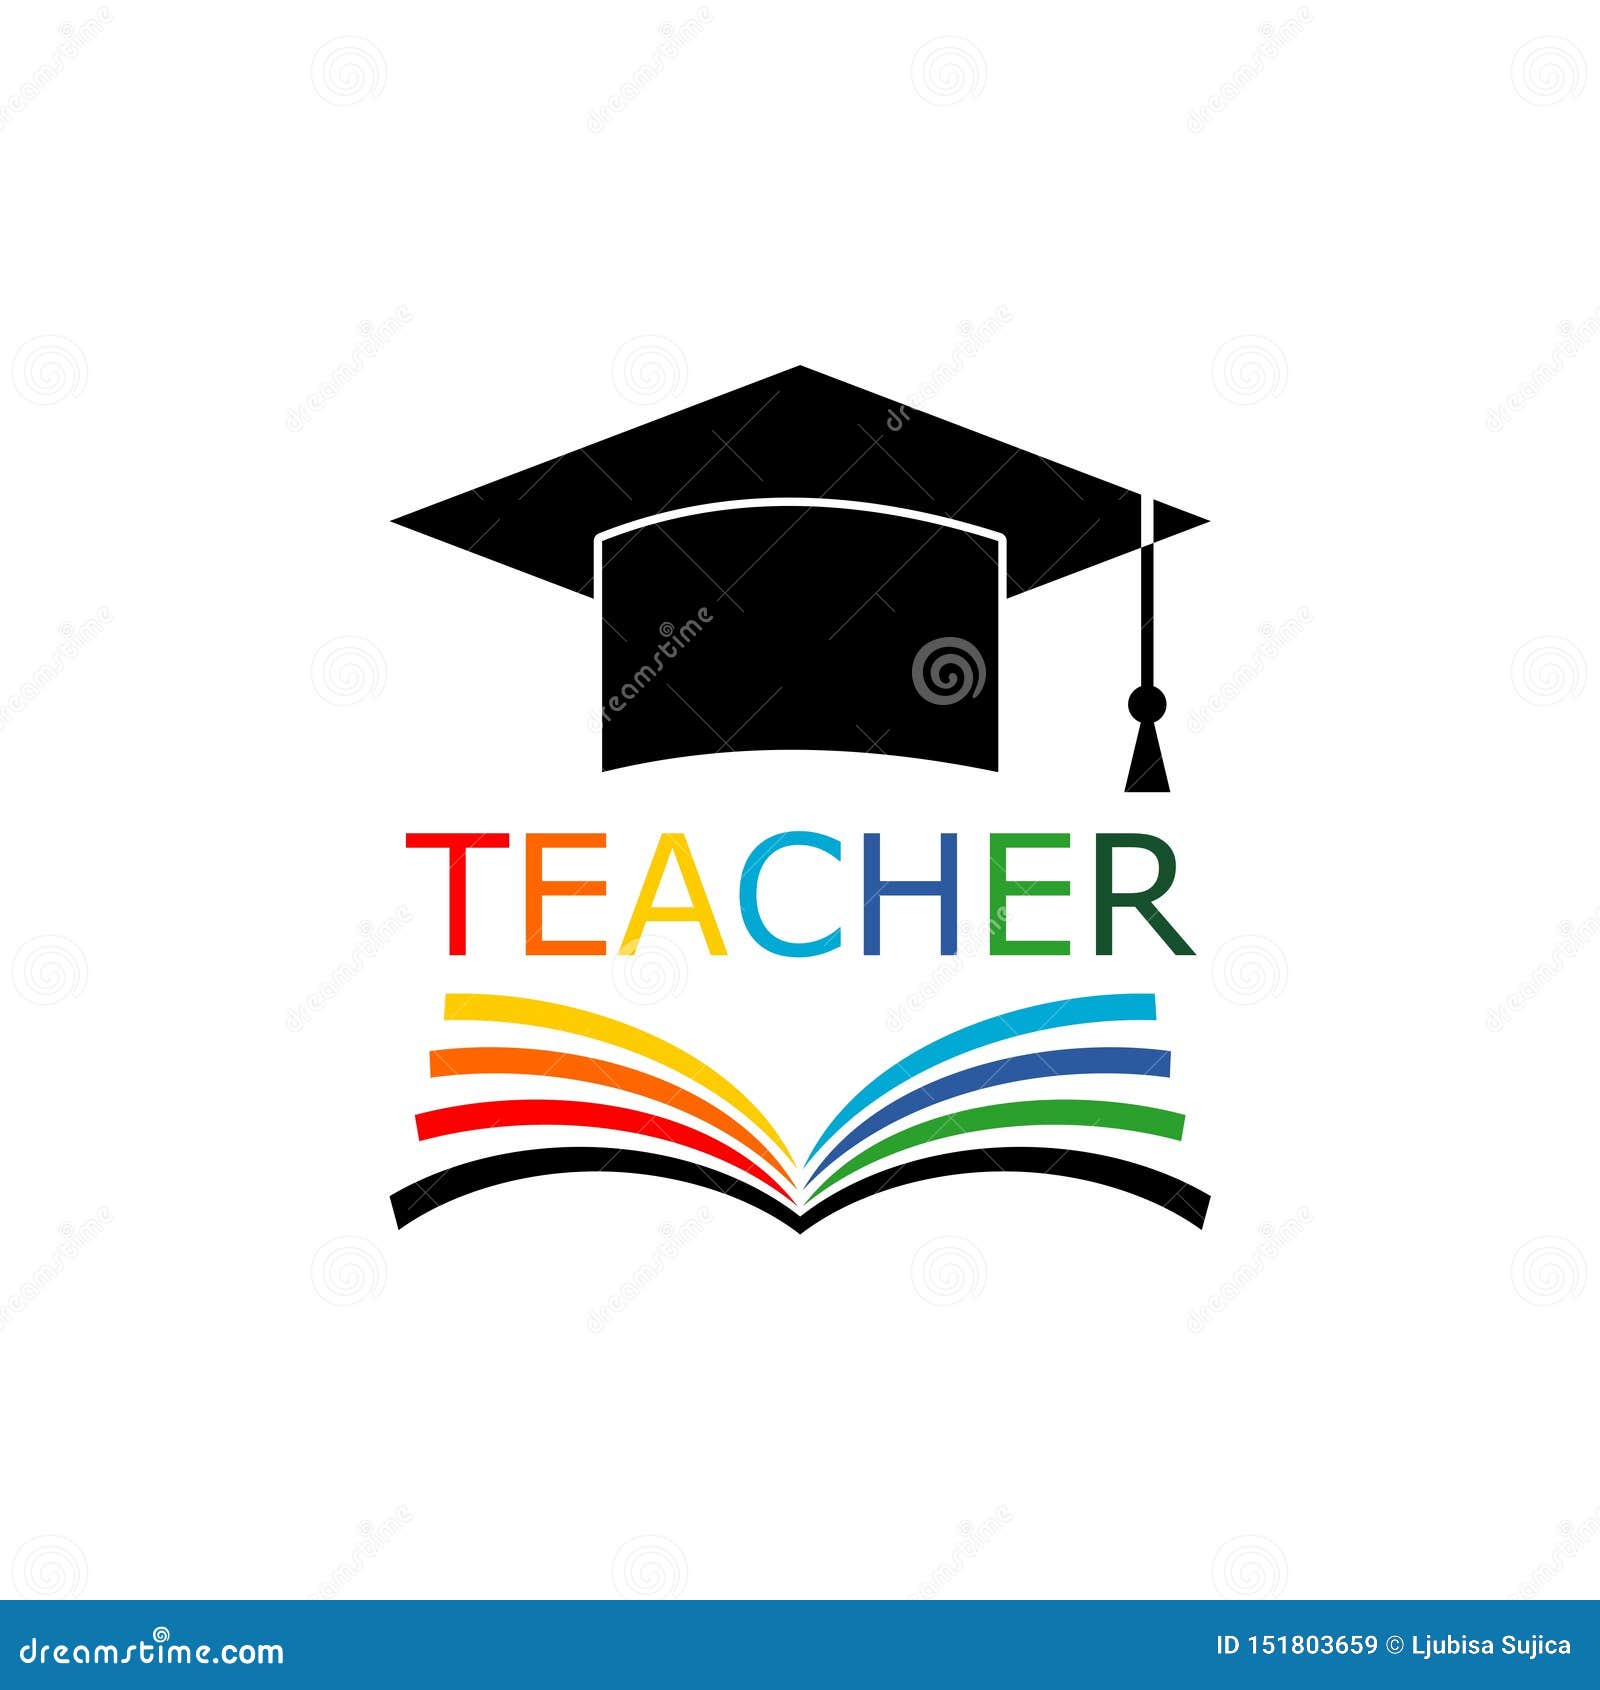 Free Teacher Logo Designs | DesignEvo Logo Maker